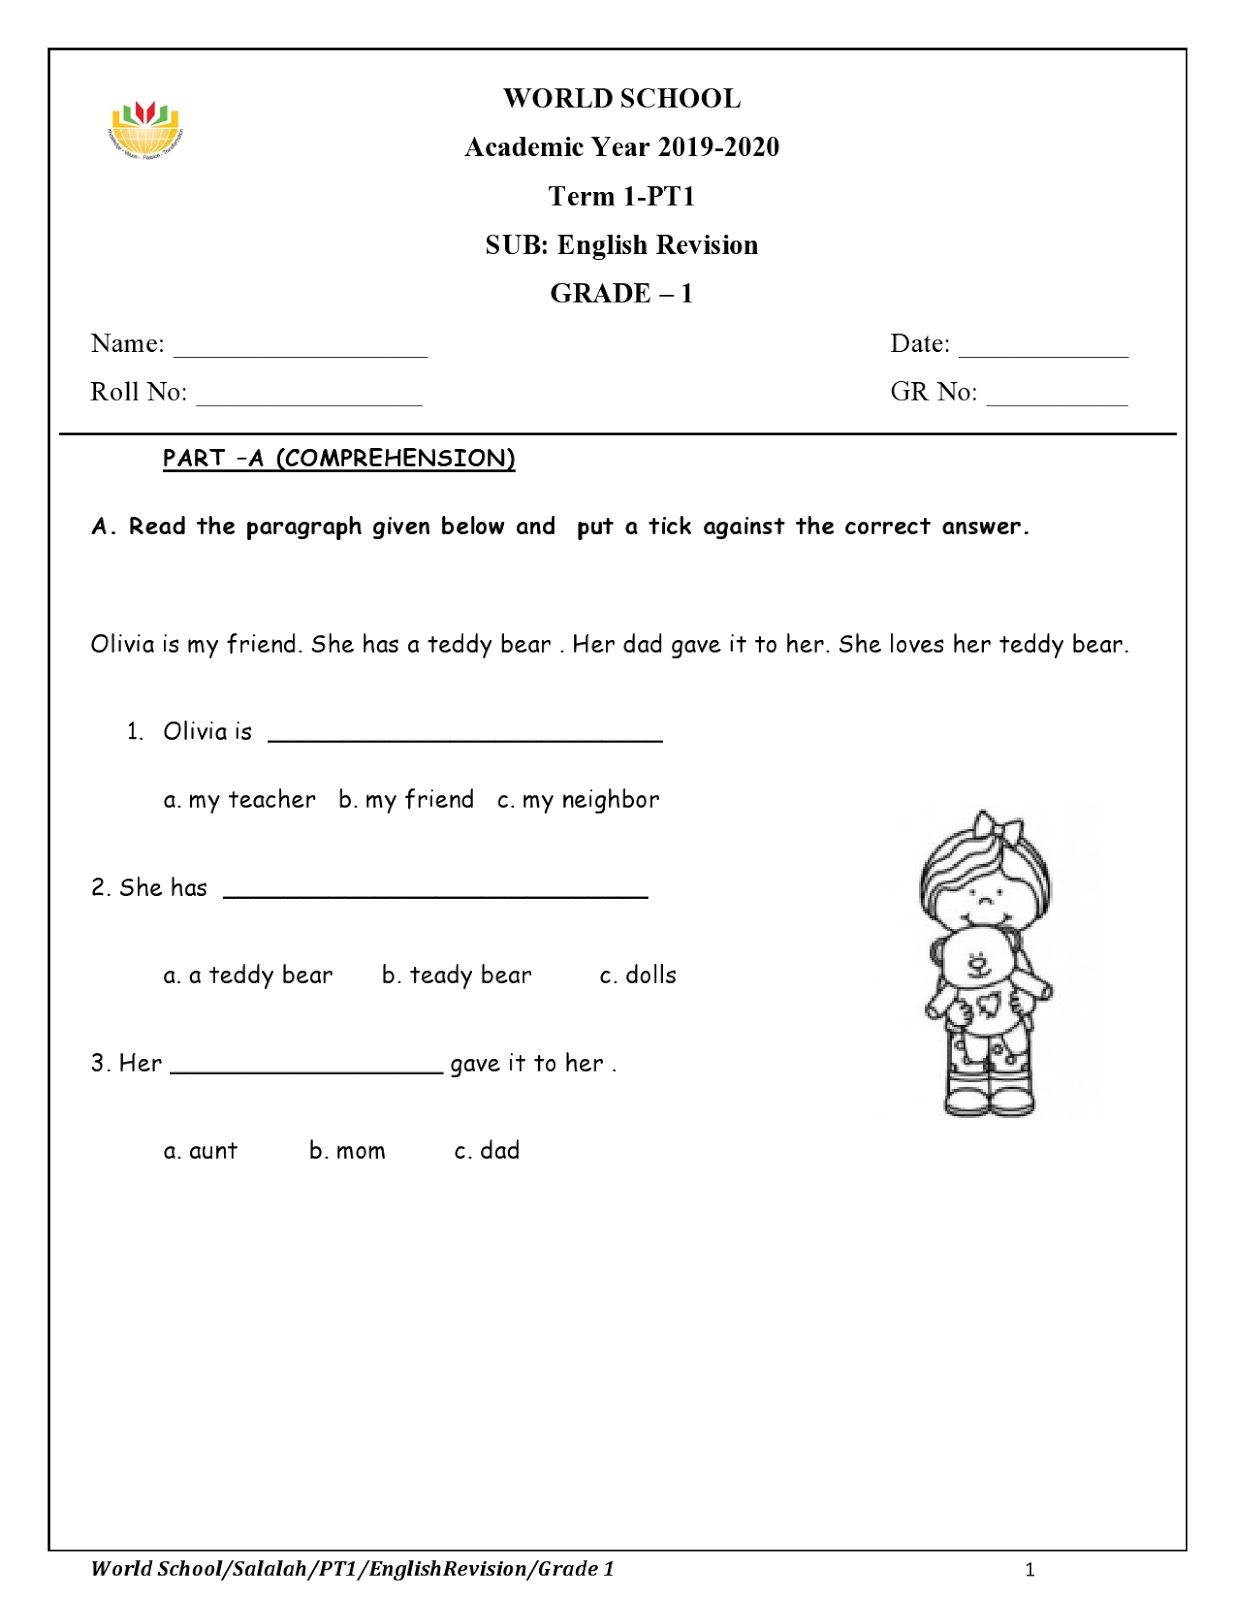 birla-world-school-oman-revision-worksheet-for-grade-1-as-on-03-10-2019